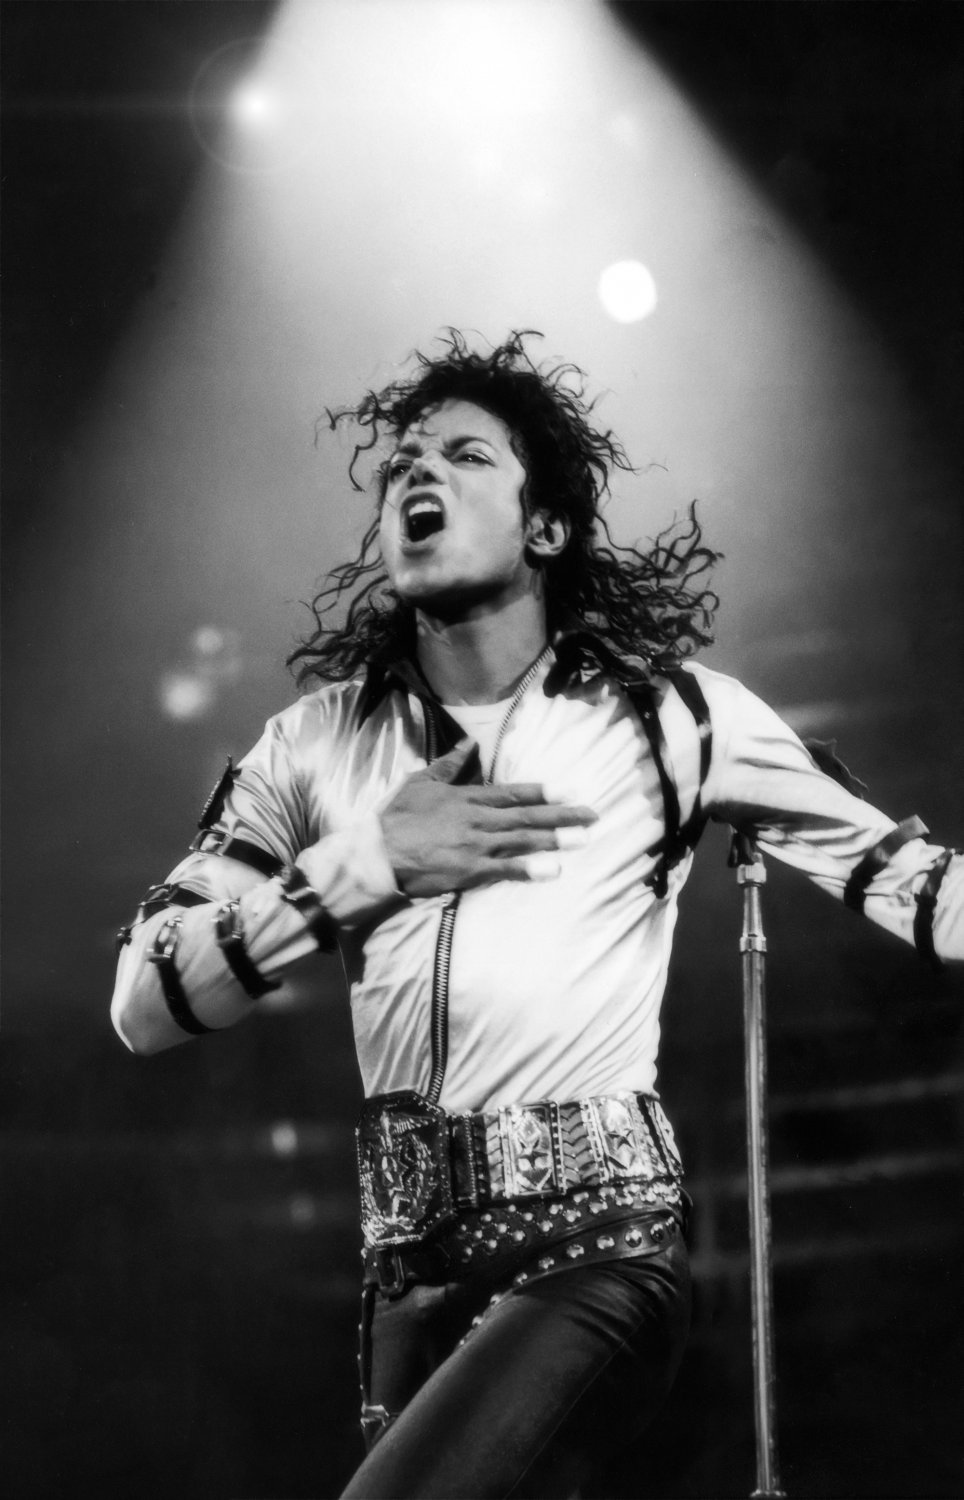 Michael Jackson  18"x28" (45cm/70cm) Poster